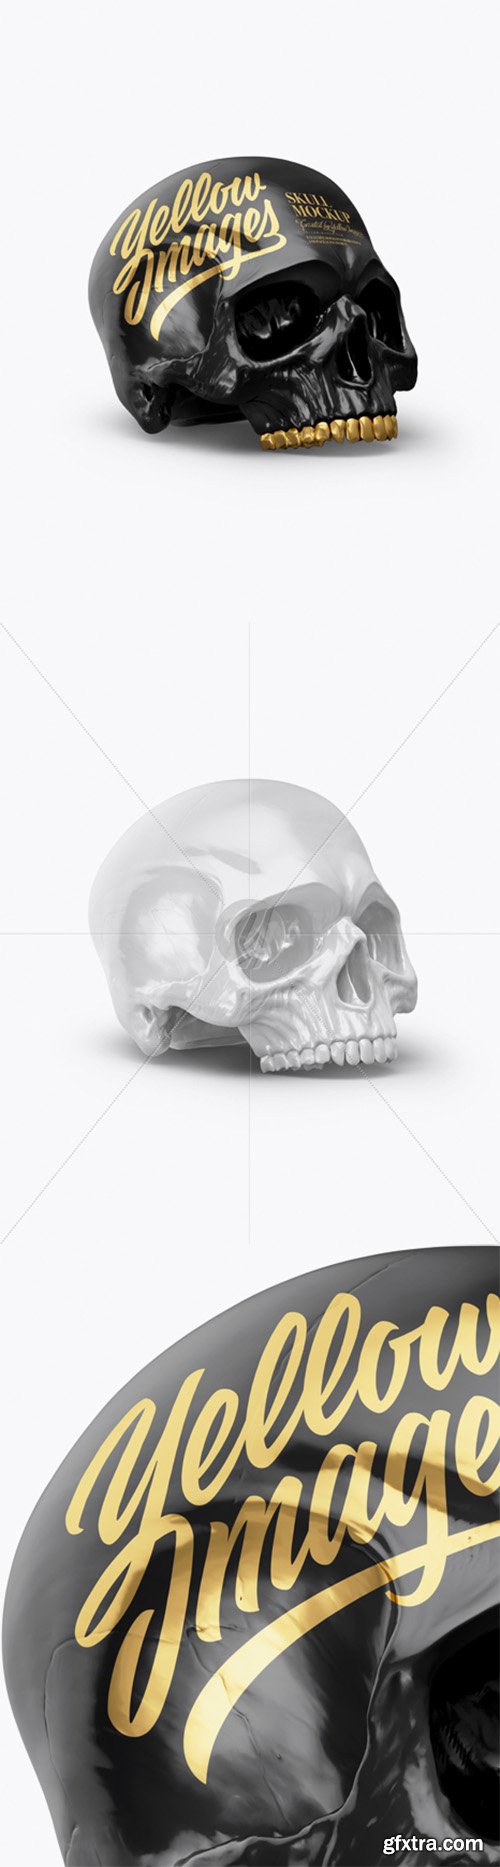 Skull Mockup - Half Side View 20853